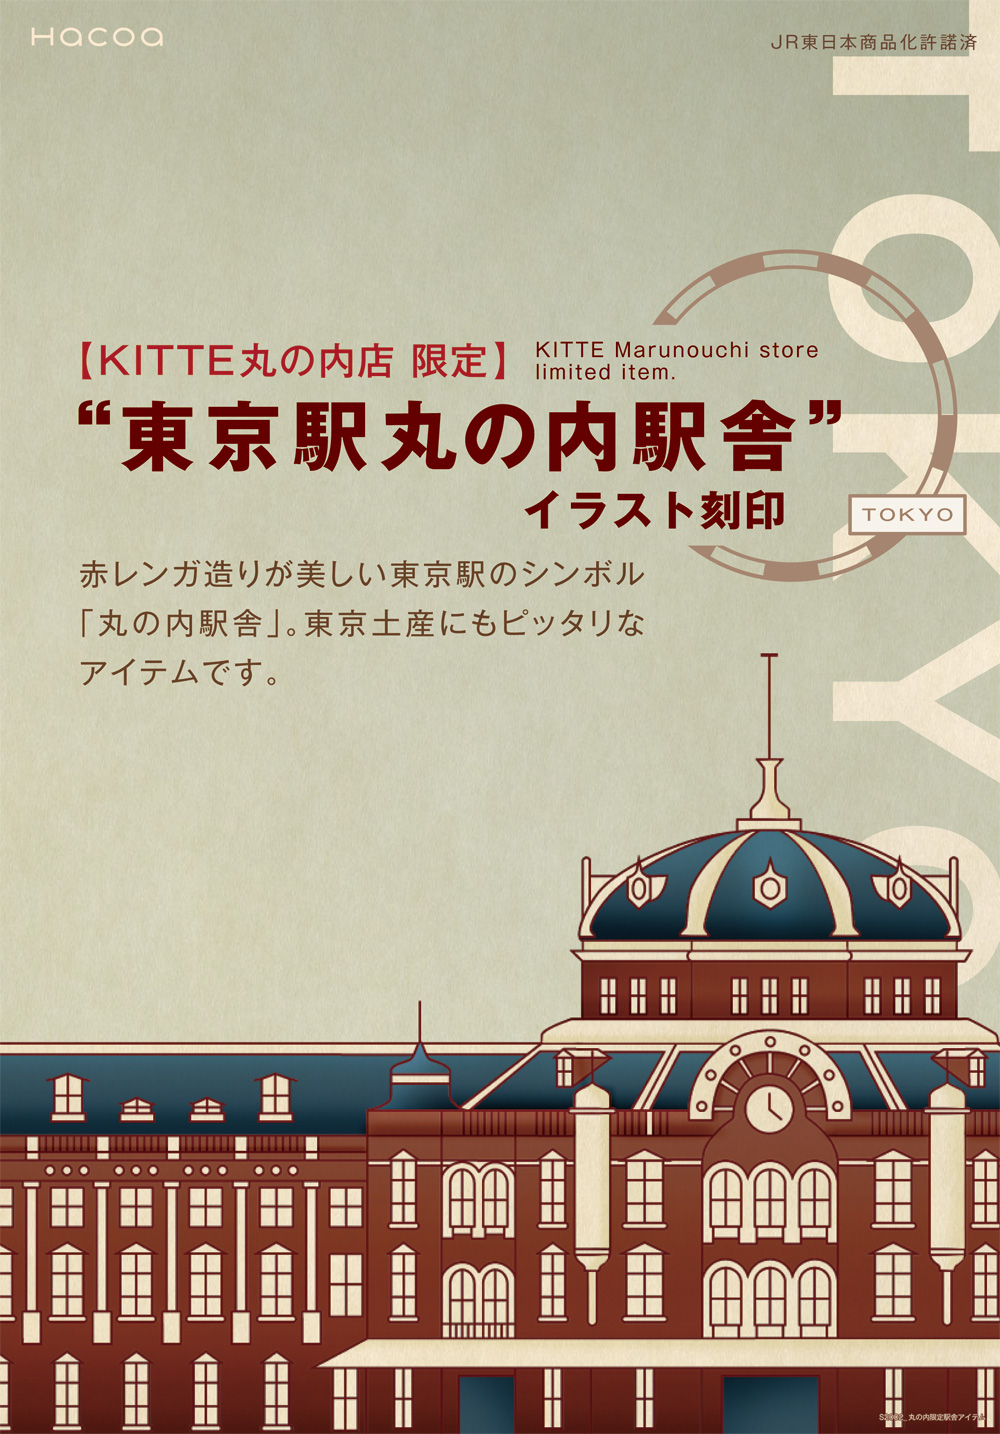 【KITTE丸の内店 限定】「東京駅丸の内駅舎」イラスト刻印